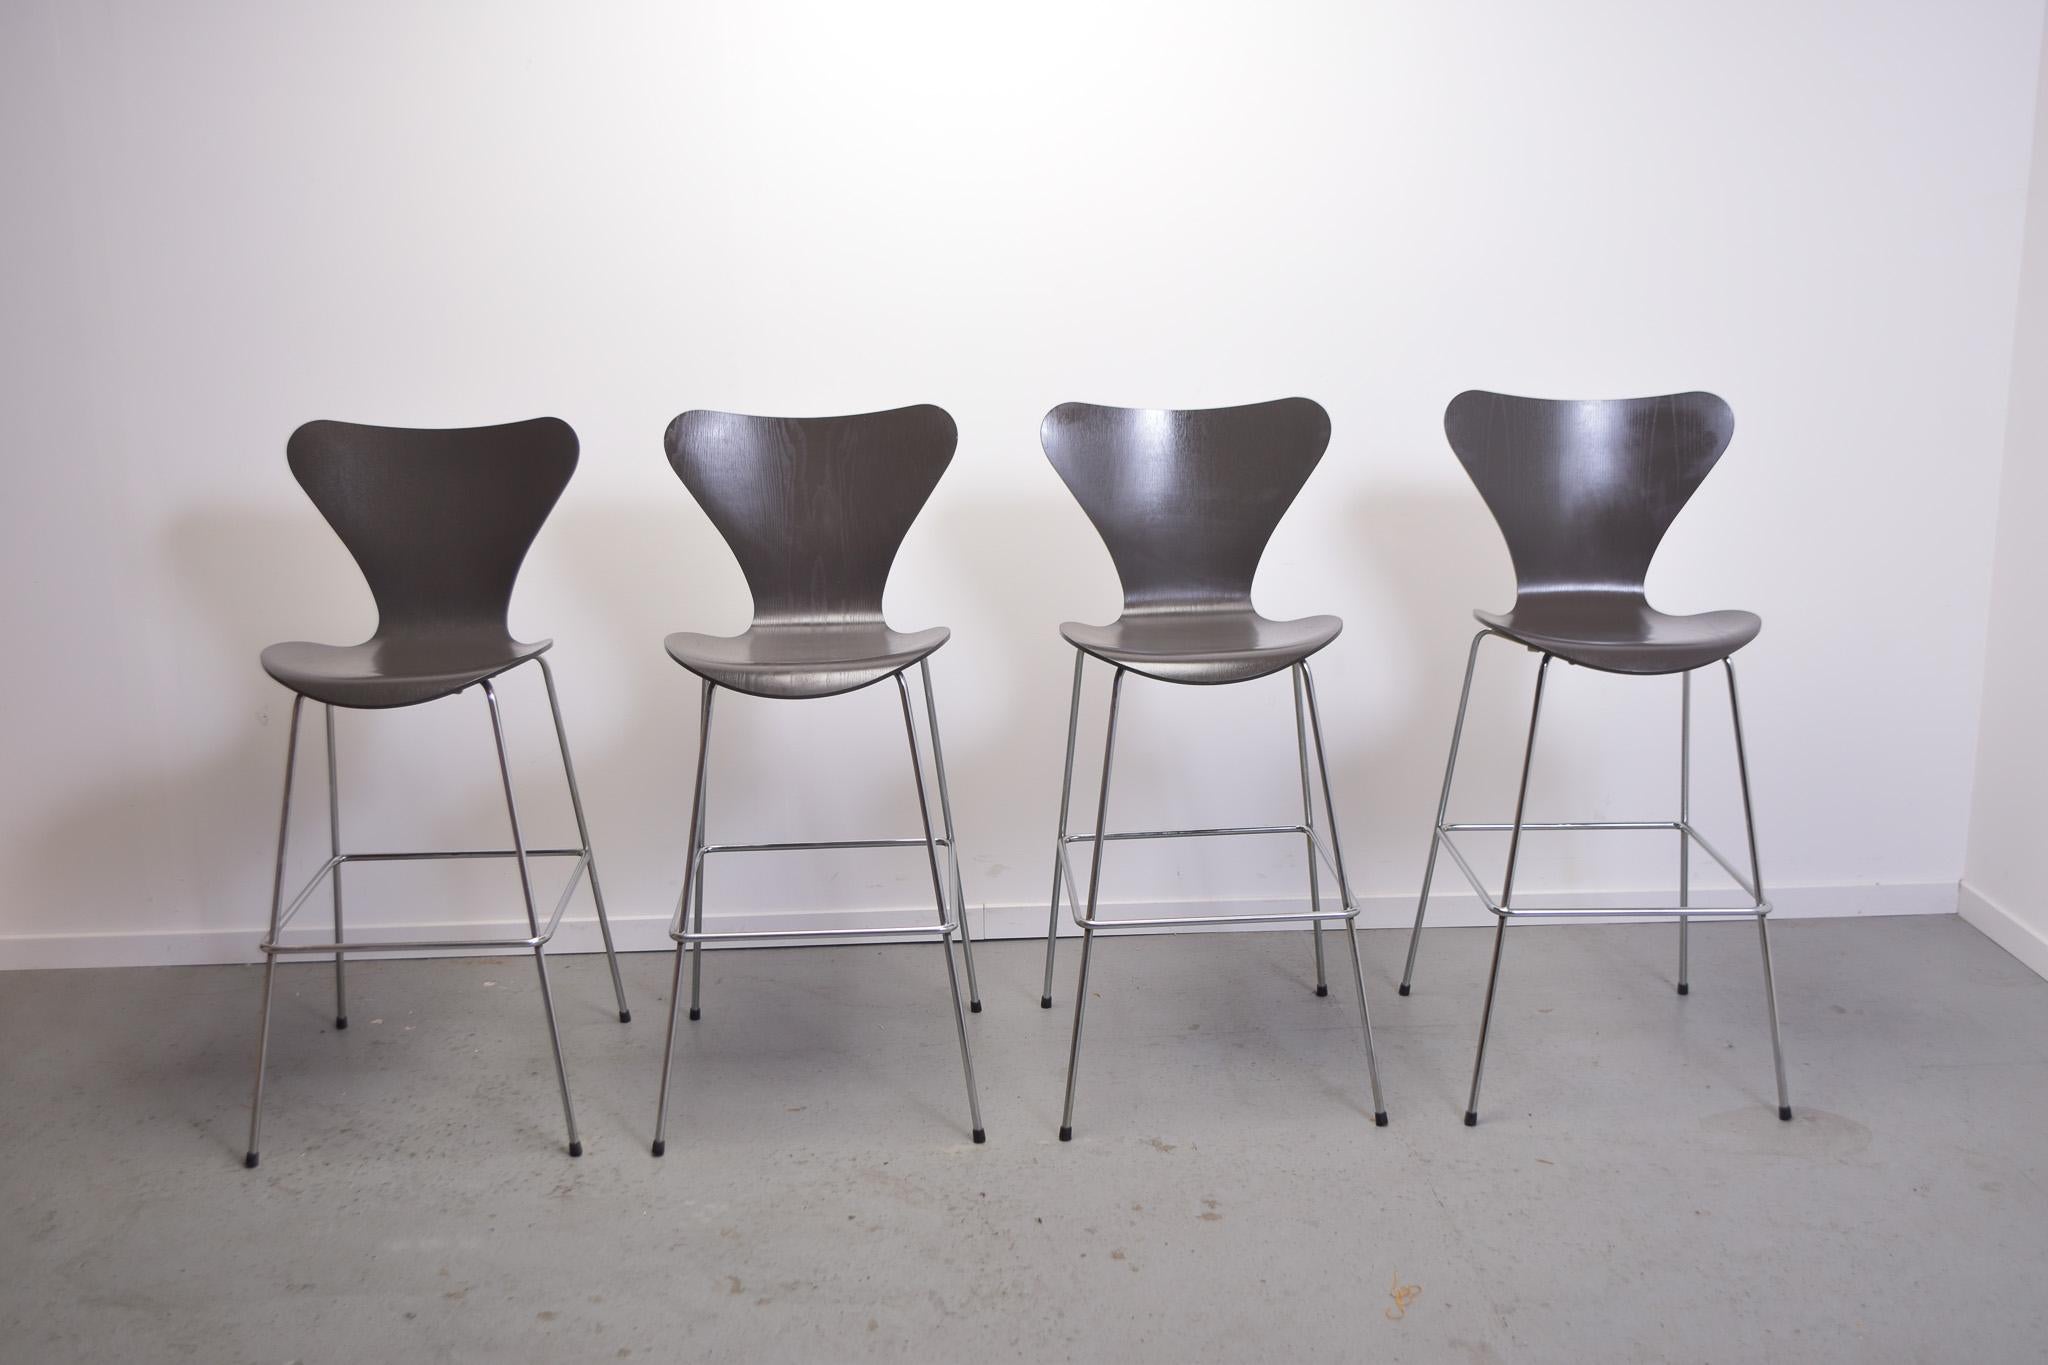 Set of 4 Frits Hansen Series 7 Butterfly bar stools designed by Arne Jacobsen.

Shells in Dark grey oak with chrome base.